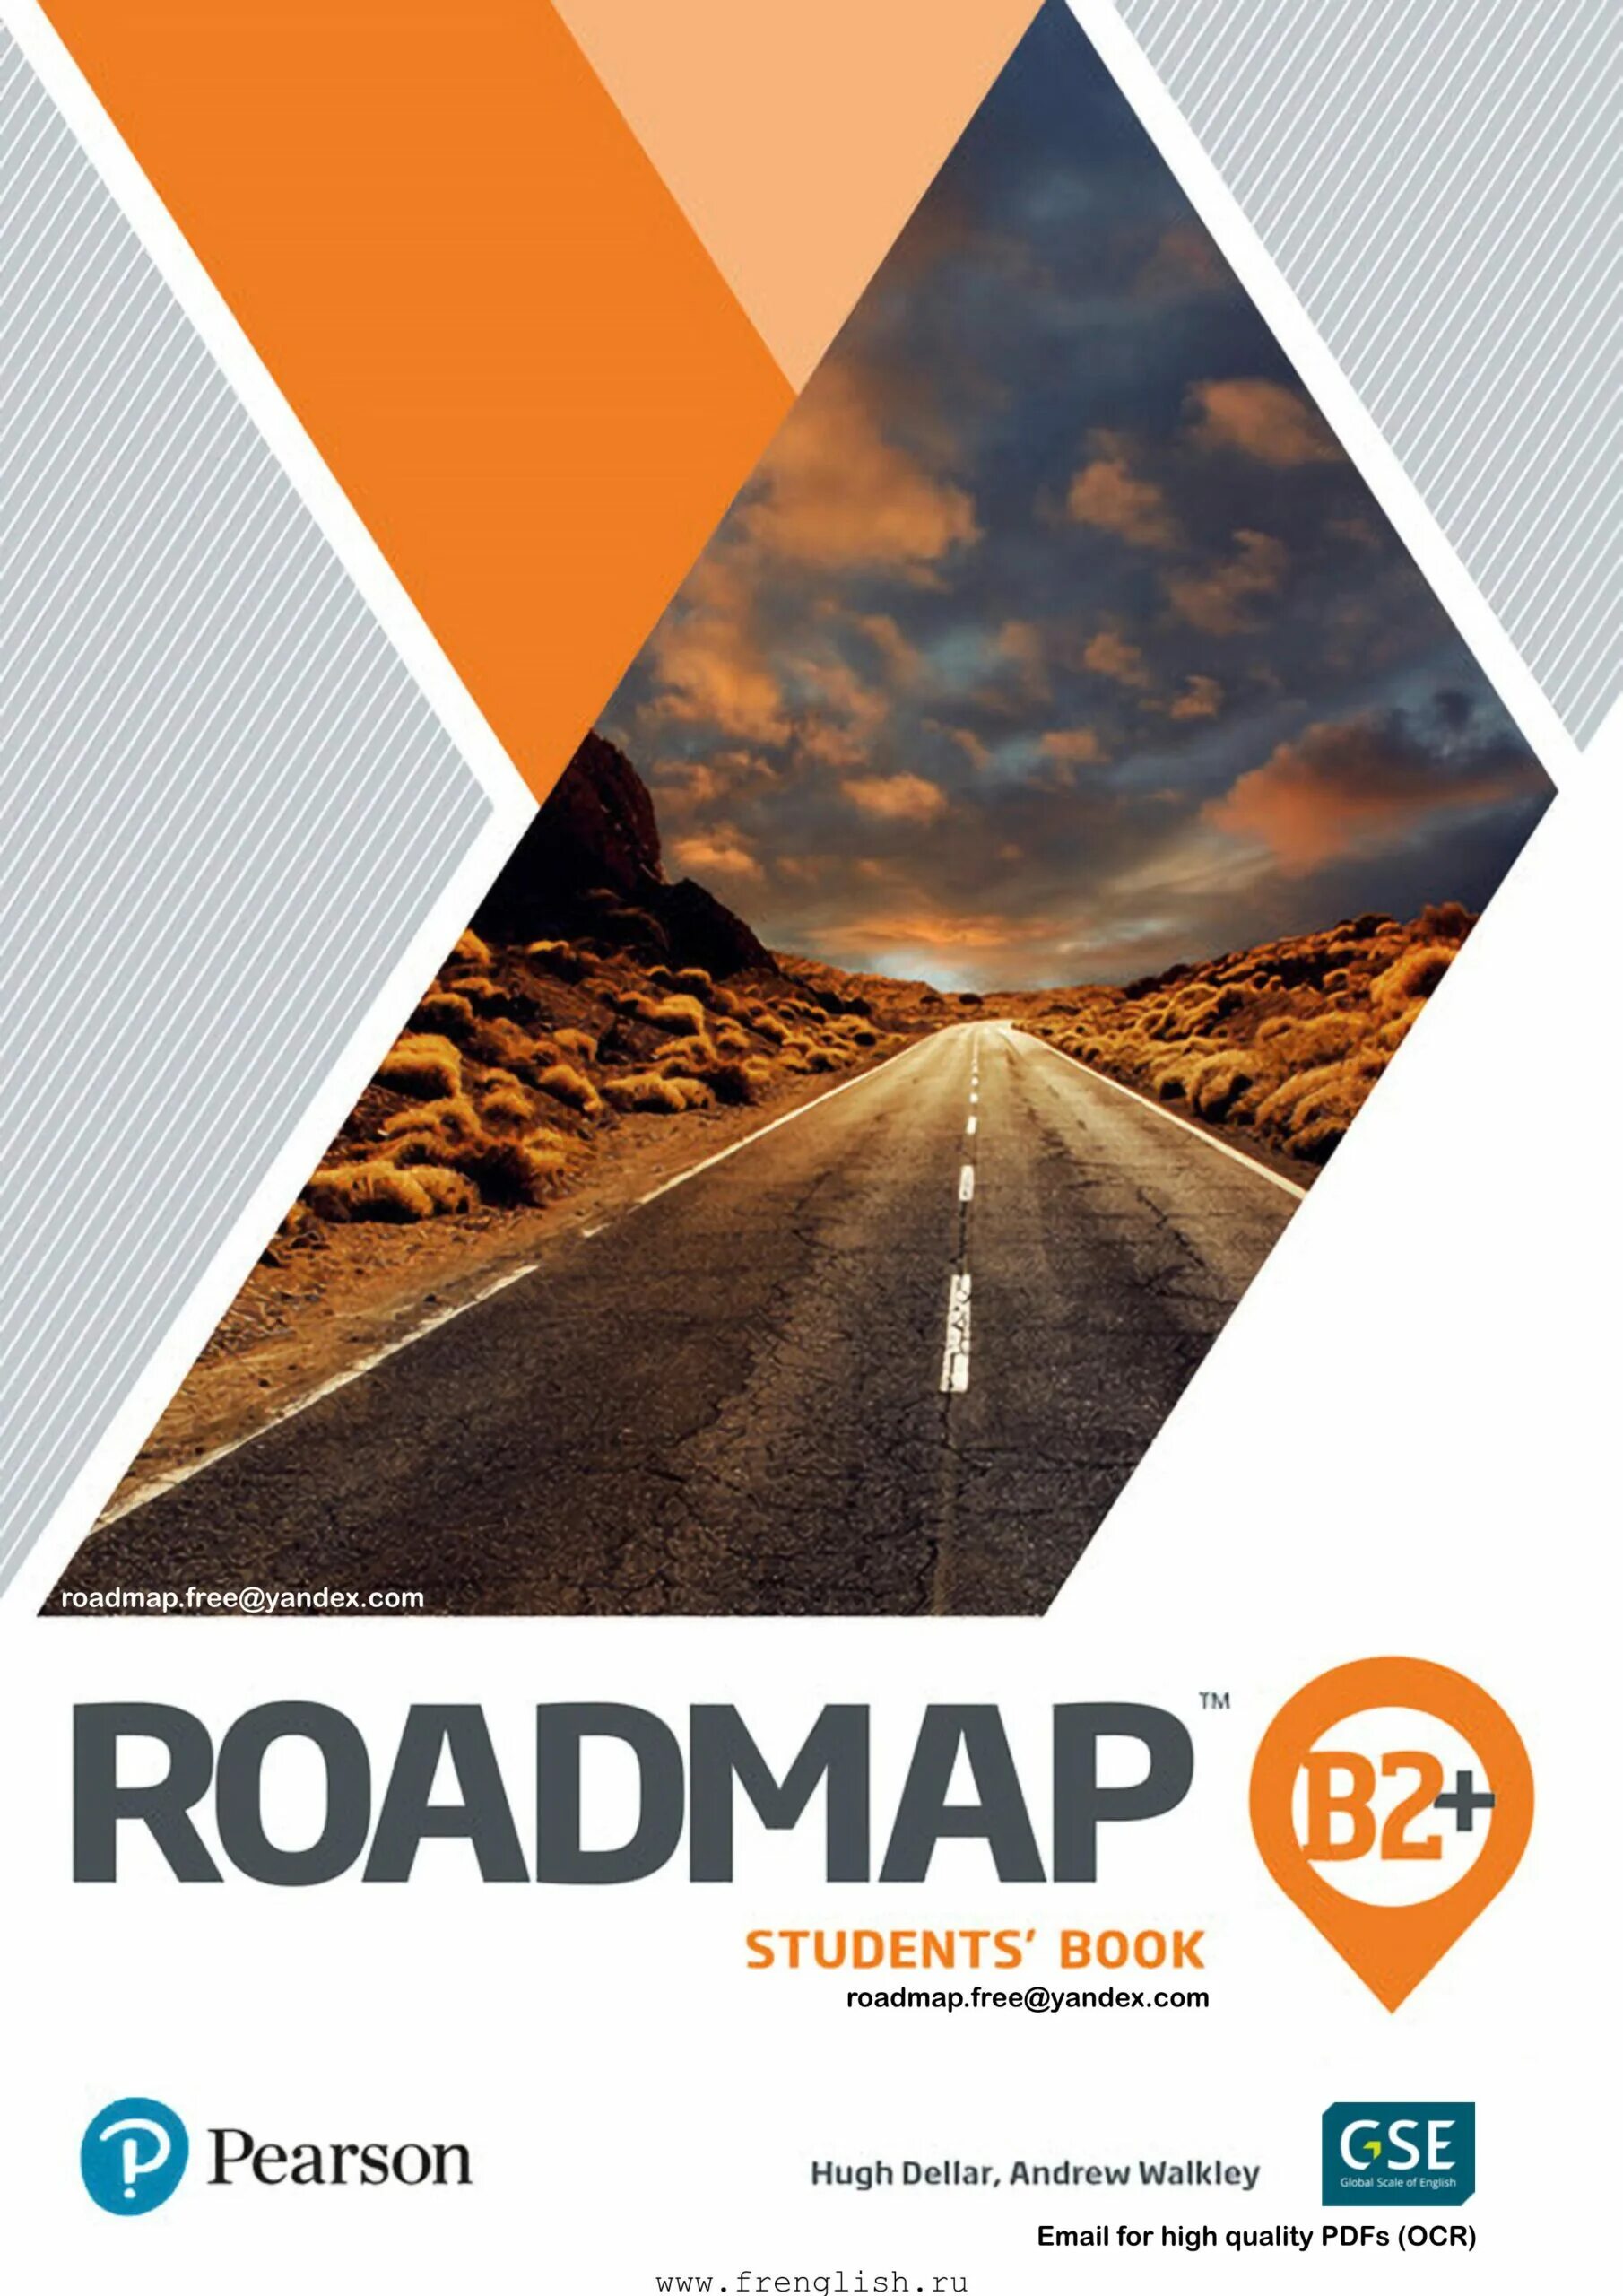 Roadmap Pearson. Roadmap учебник. Roadmap b2. Roadmap b2 Plus. Roadmap student s book